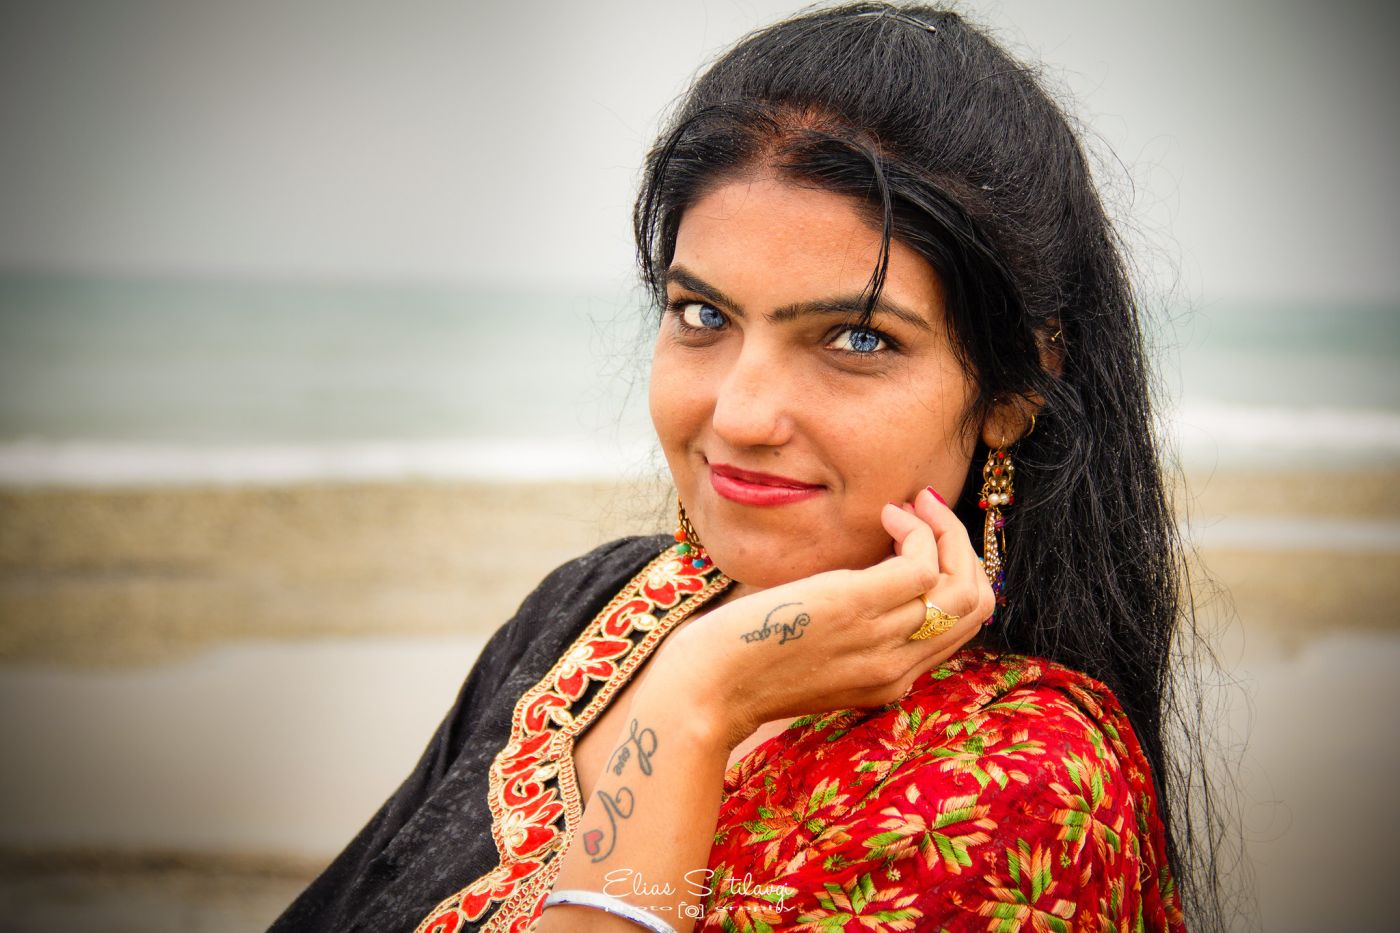 portrait photography indian woman